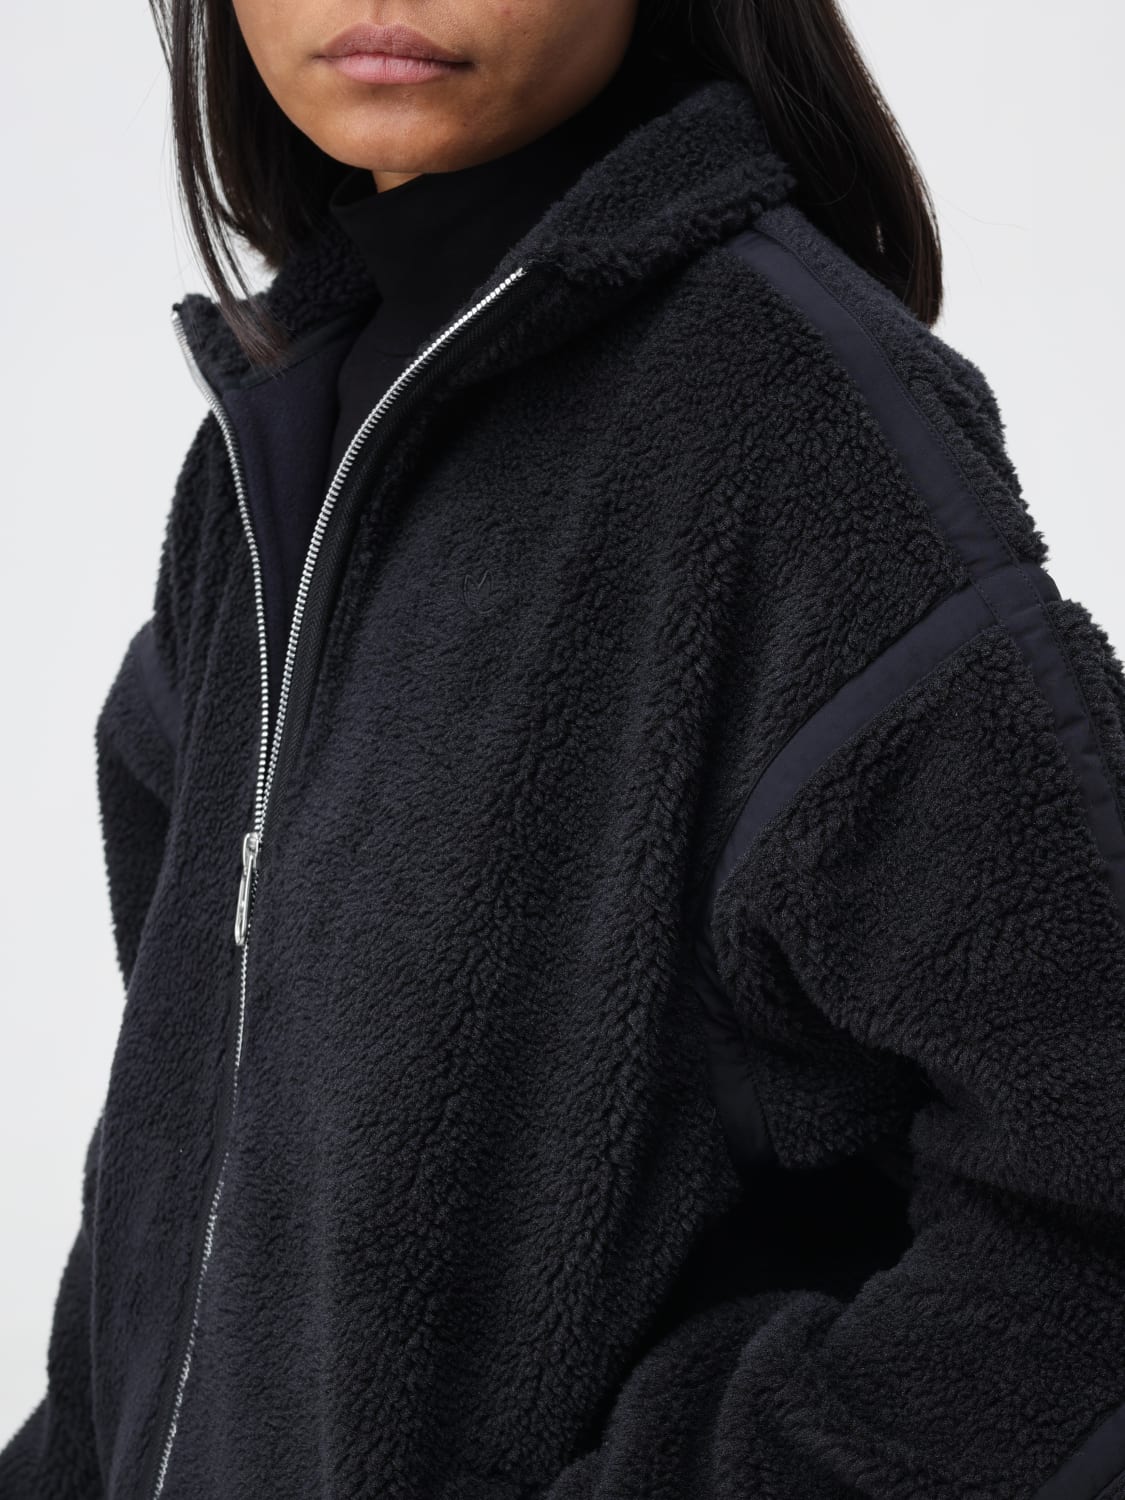 ADIDAS ORIGINALS: Damen Sweatshirt - Schwarz | Adidas Originals Sweatshirt  II8041 online auf | Sweatshirts